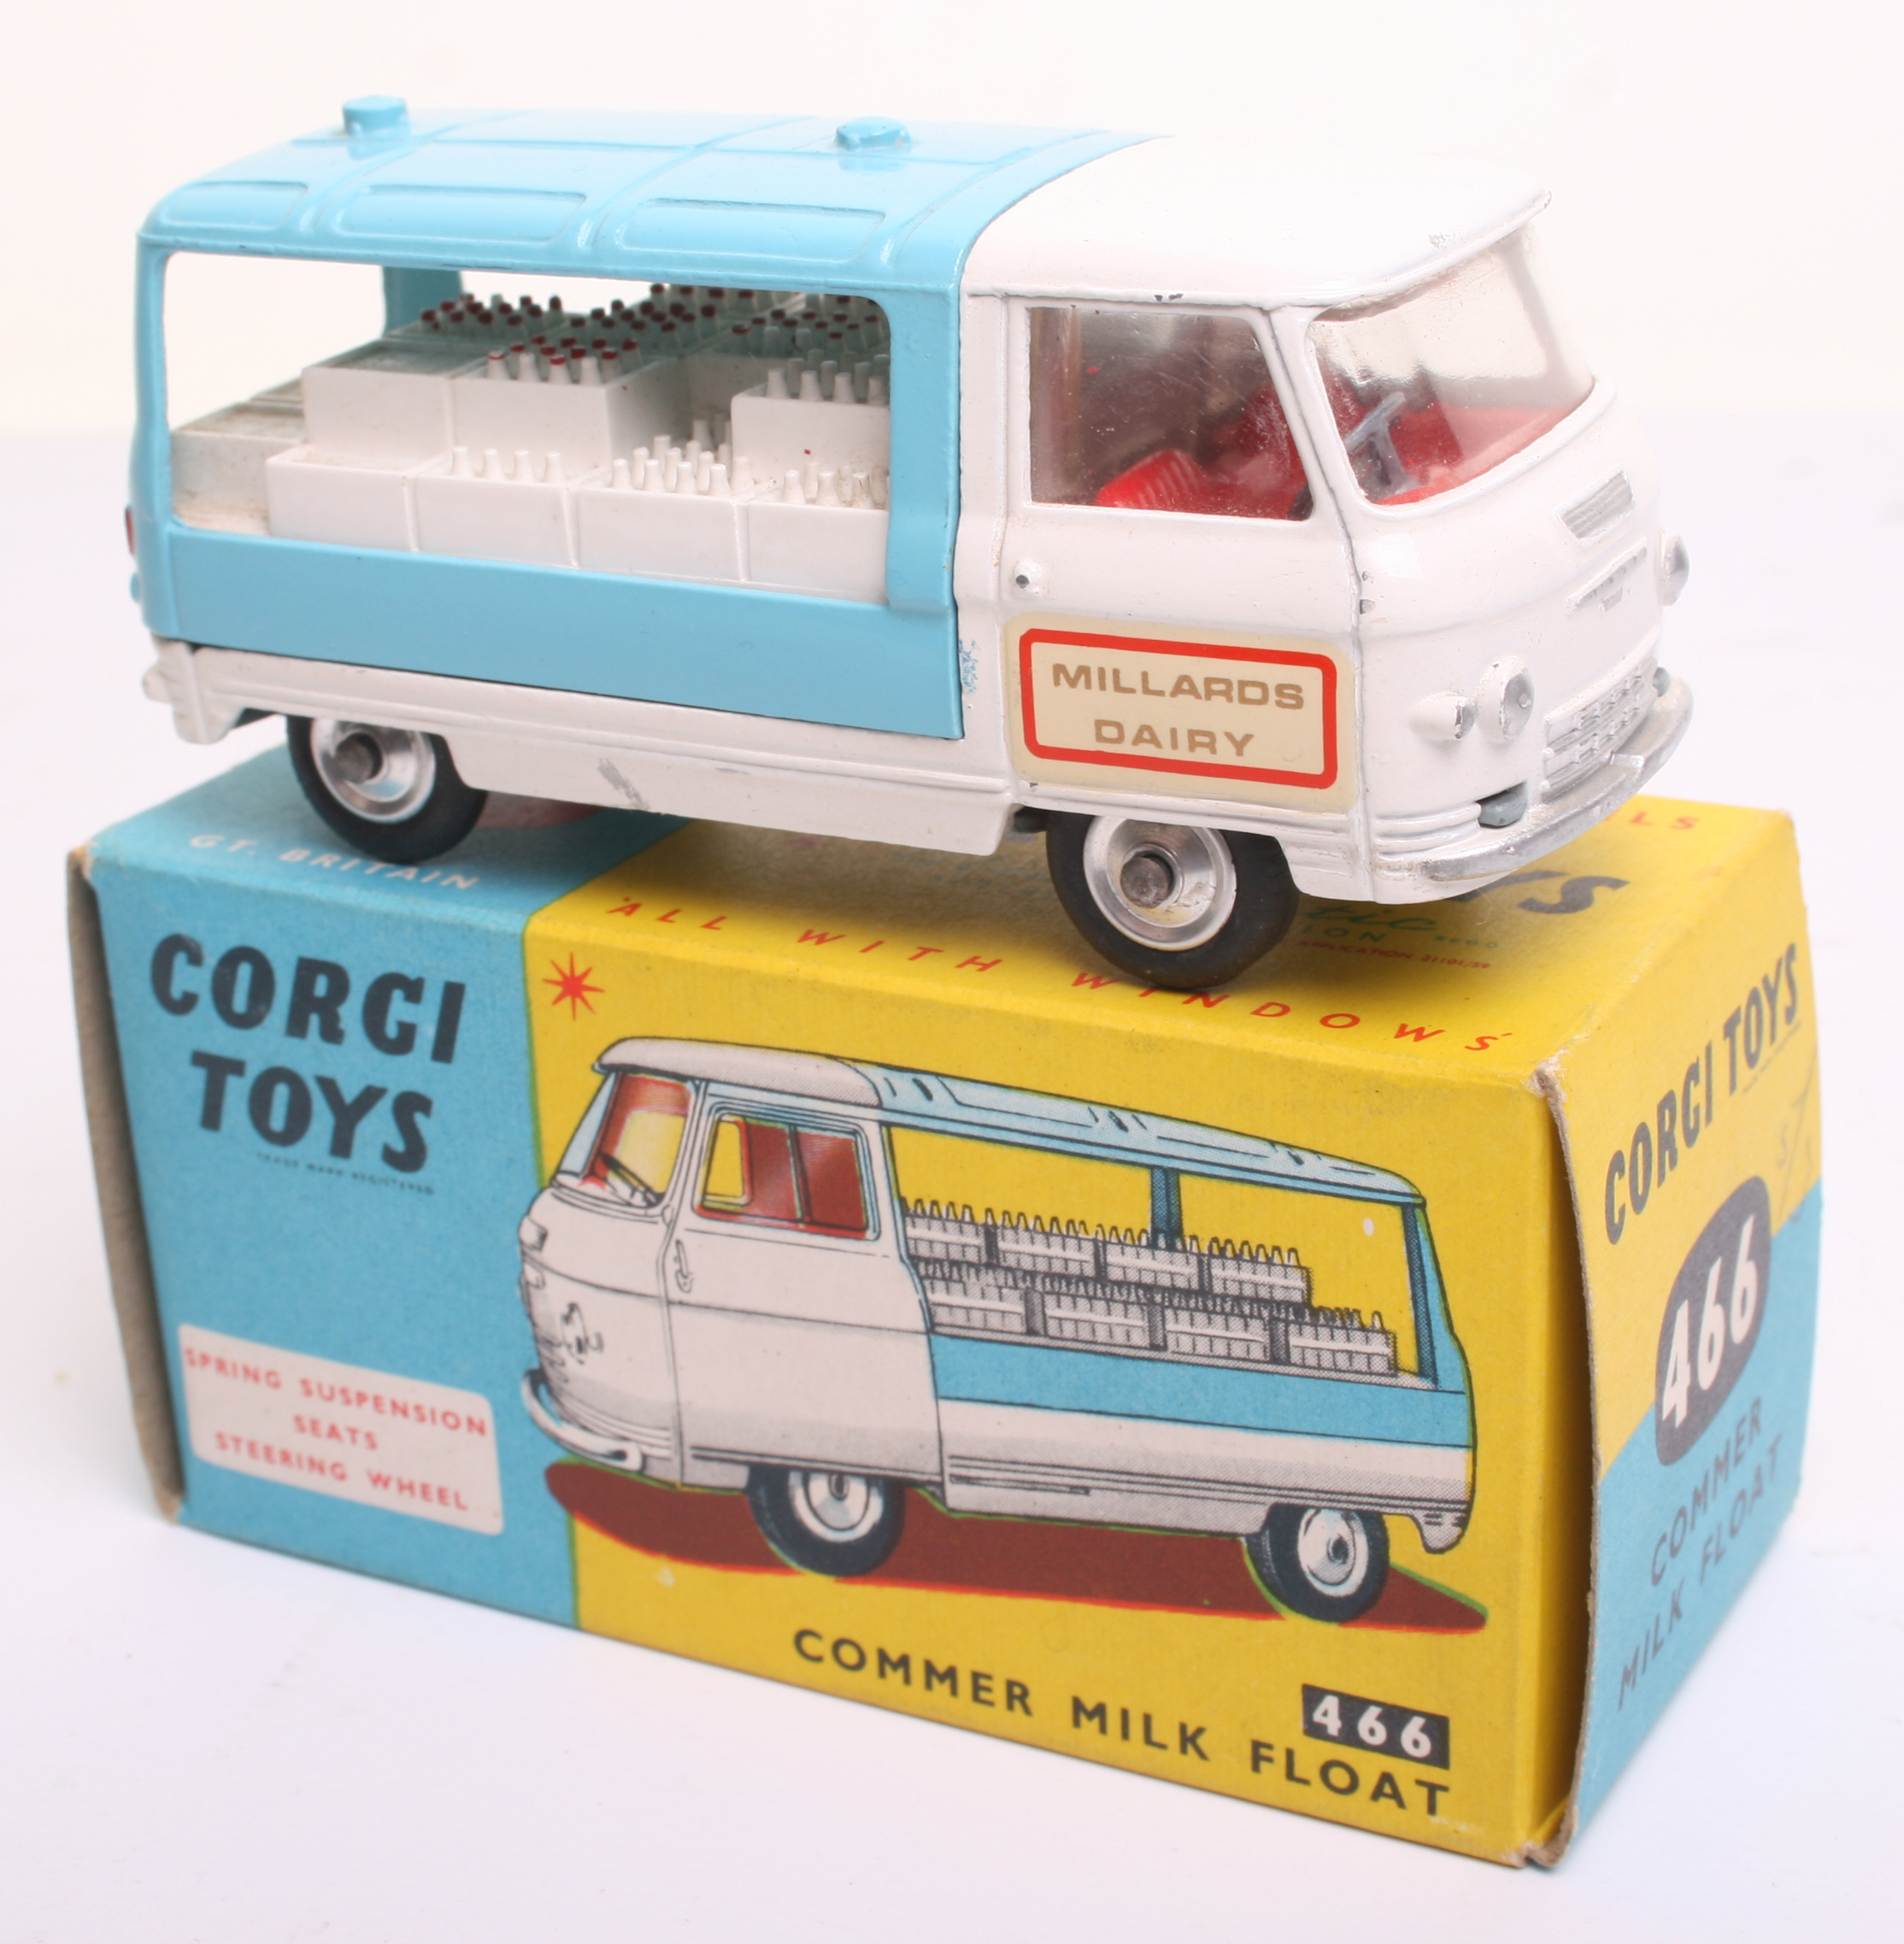 Corgi Toys 466 Commer  Milk Float, white cab/chassis, pale blue back, red interior “Millards